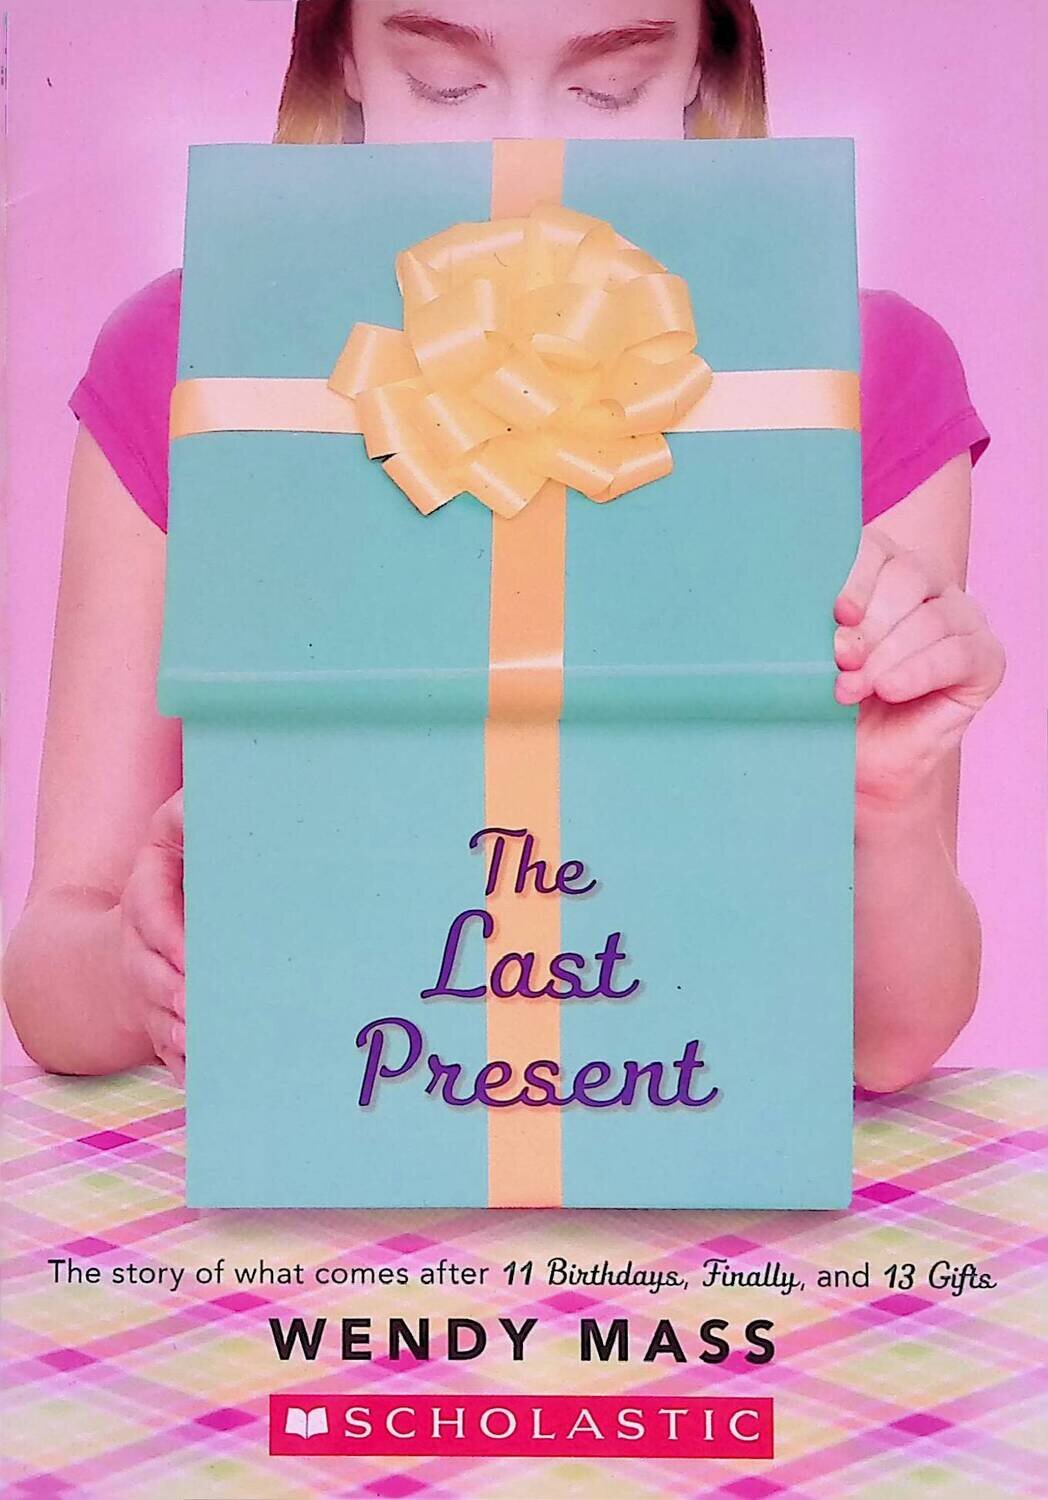 The Last Present: A Wish Novel; Mass Wendy